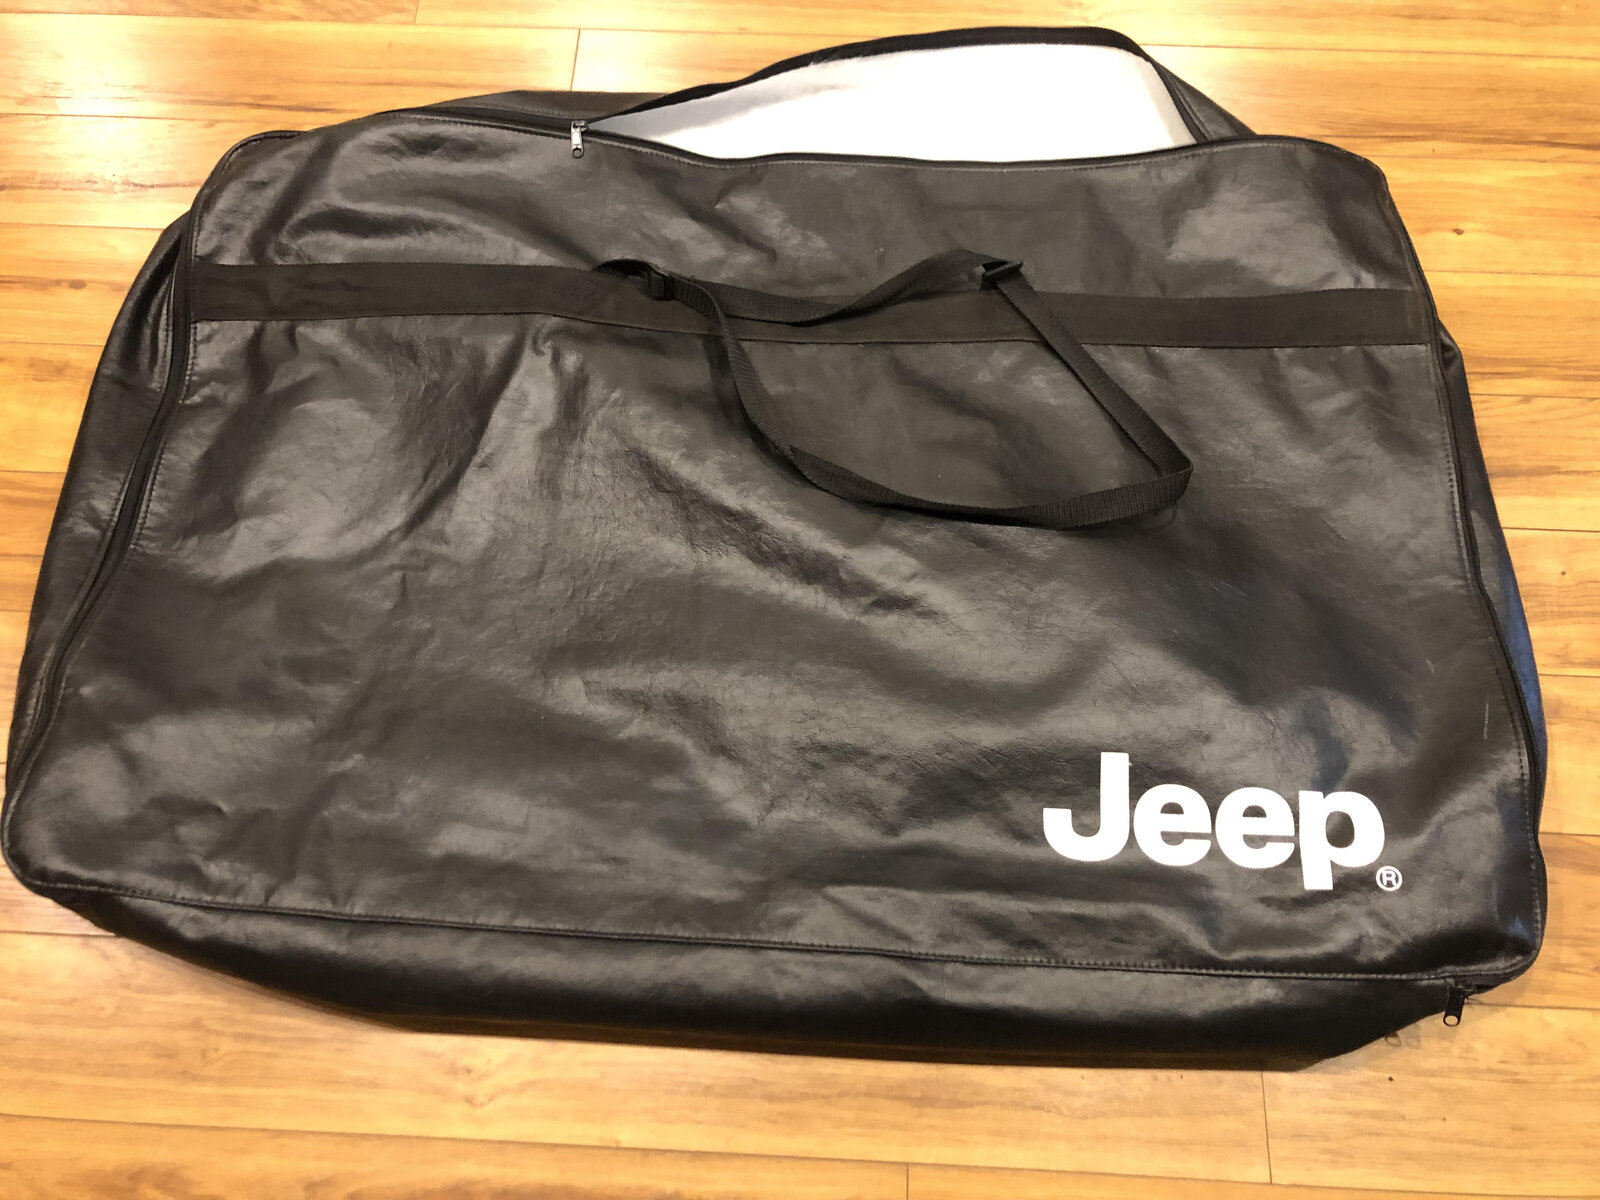 Jeep Storage Bag.jpg